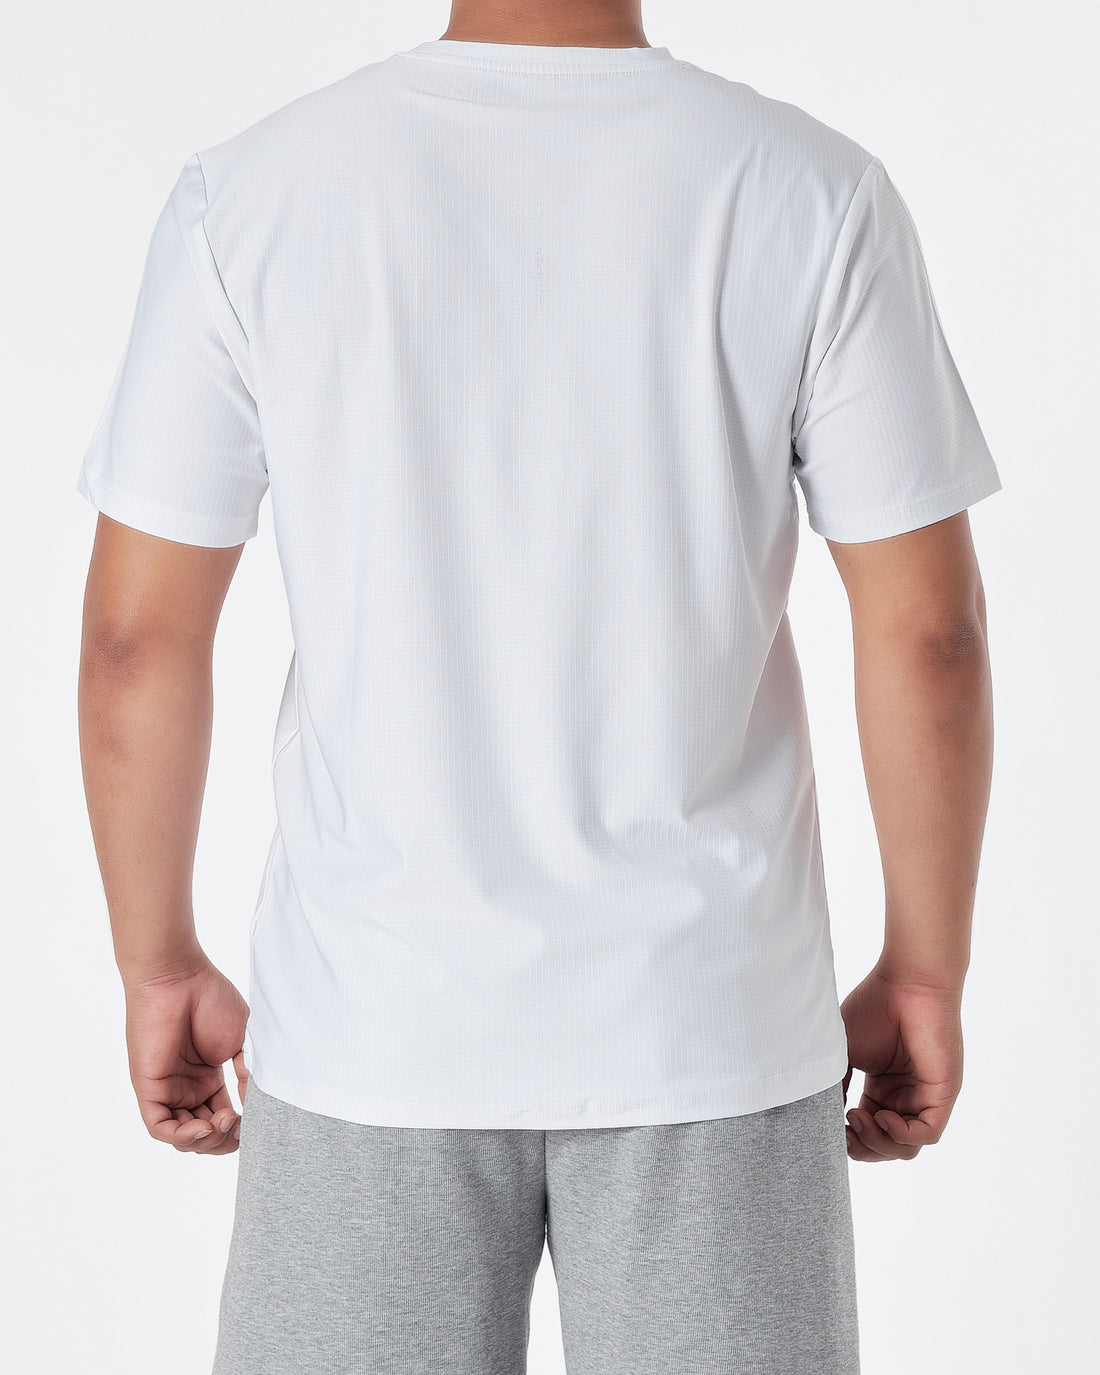 UA Logo Printed Men Sport White T-Shirt 12.90